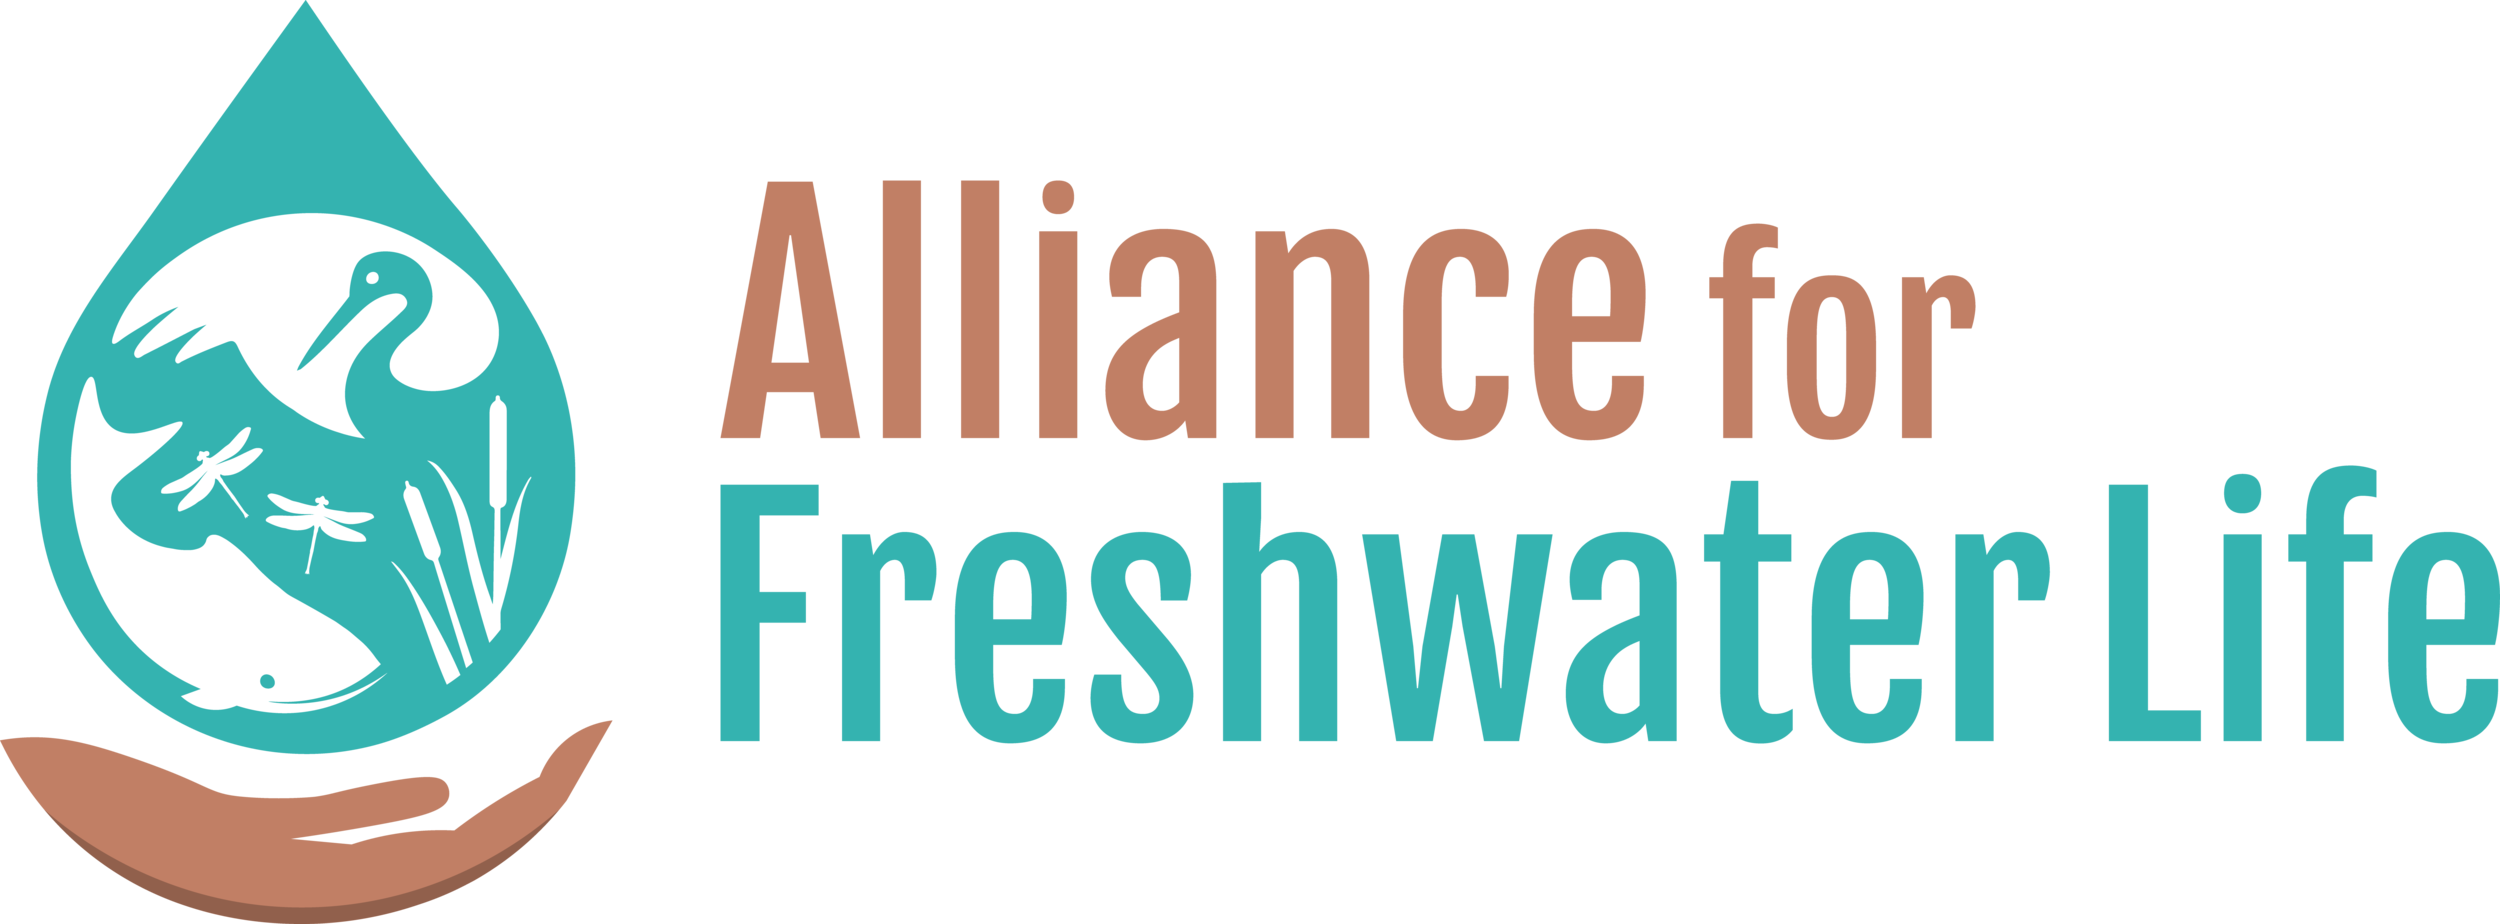 Alliance for Freshwater Life